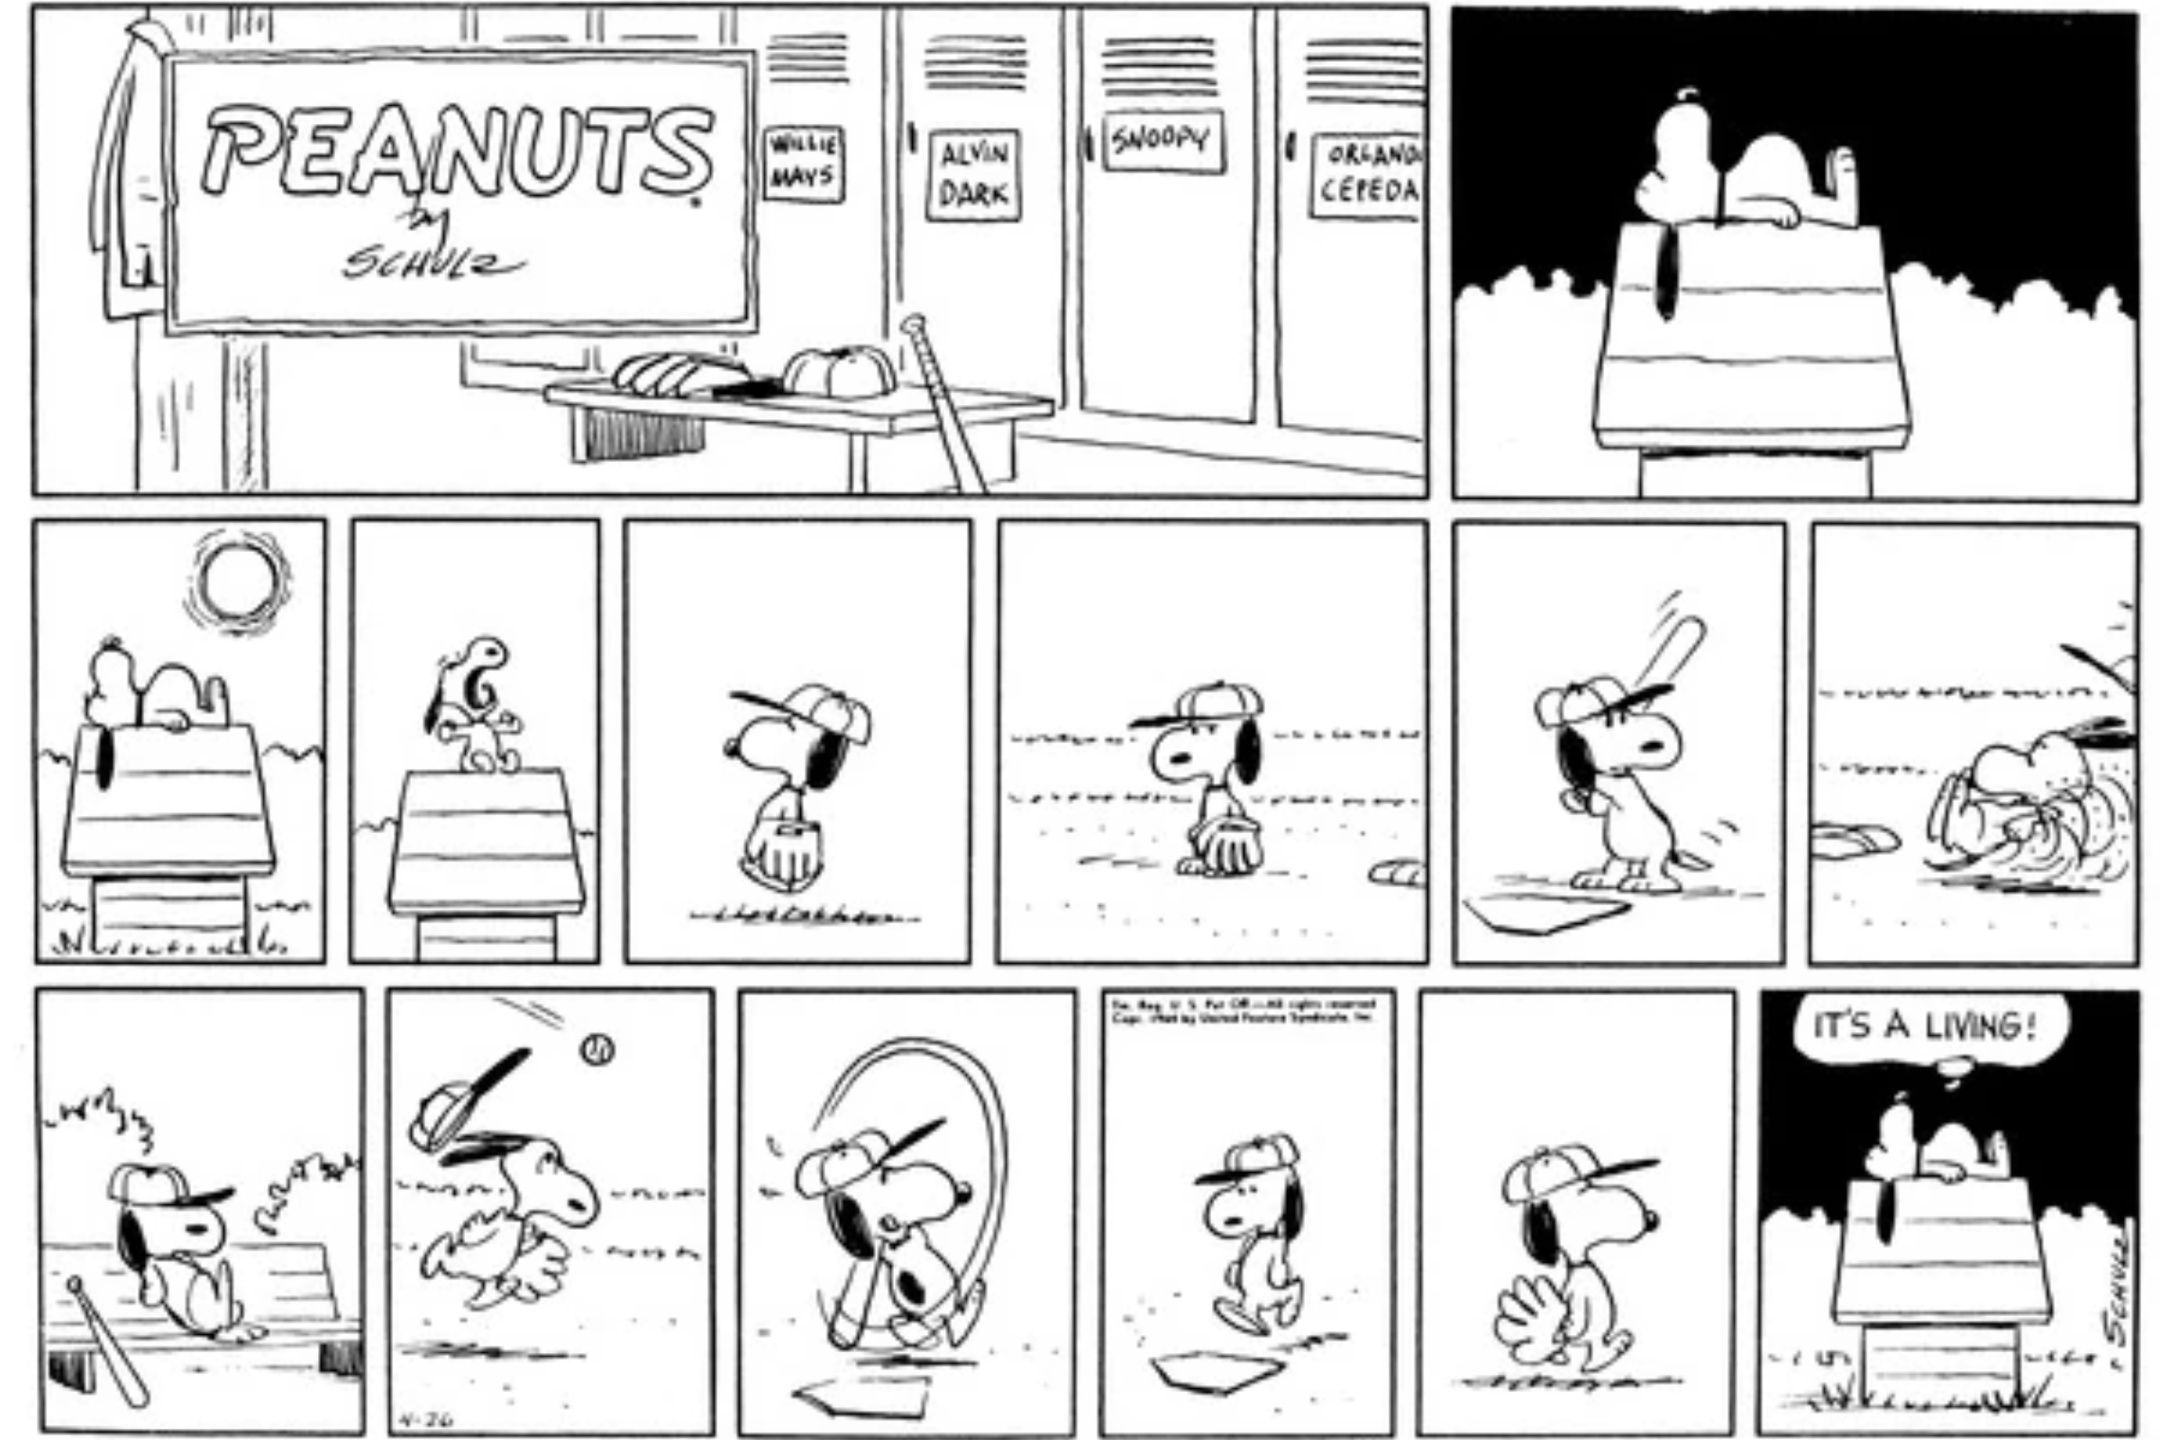 Snoopy hitting a baseball in Peanuts.